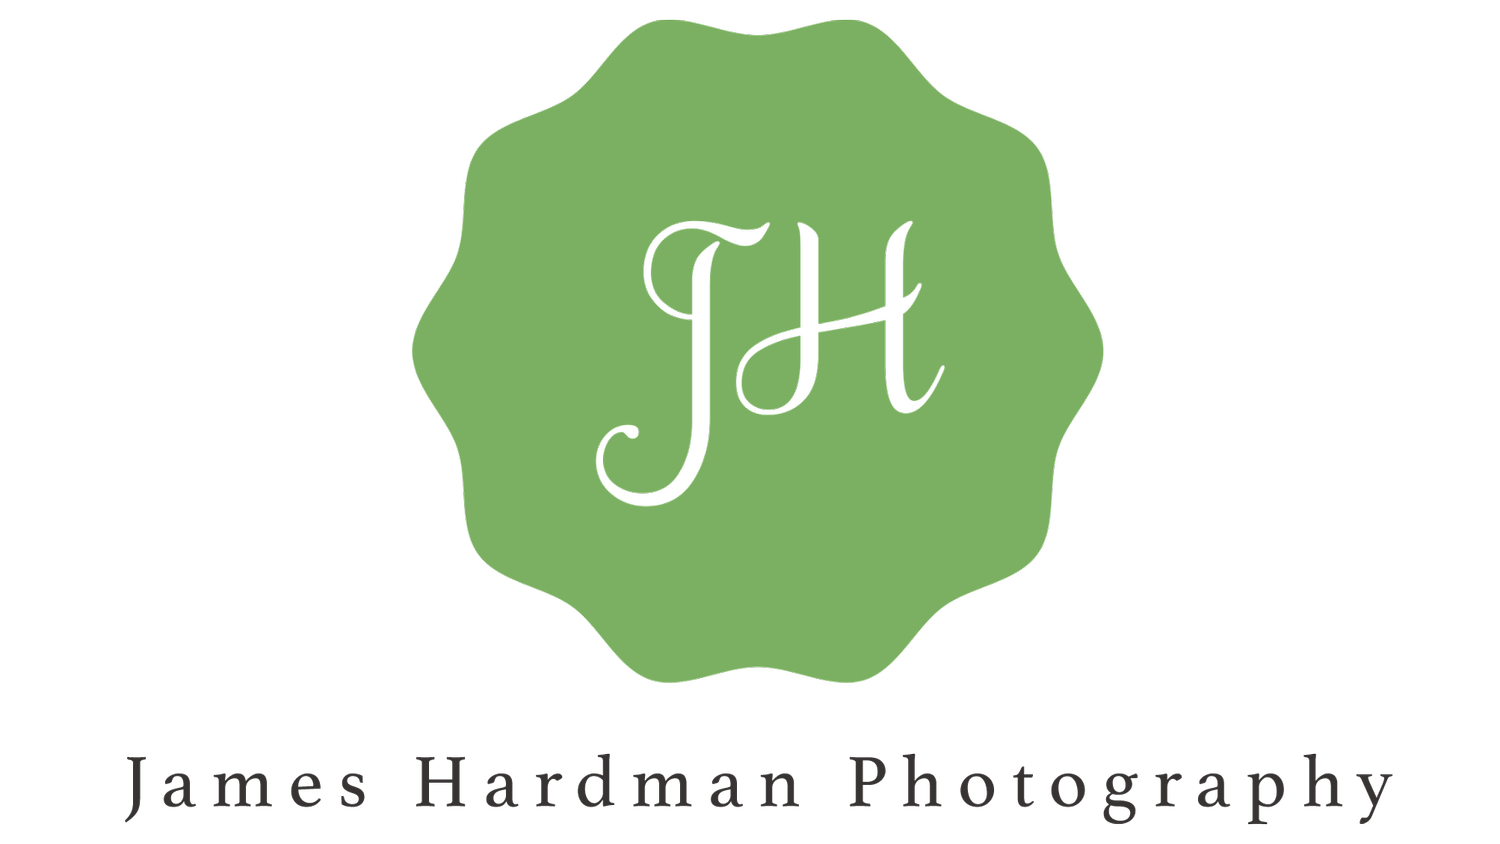 James Hardman Photography